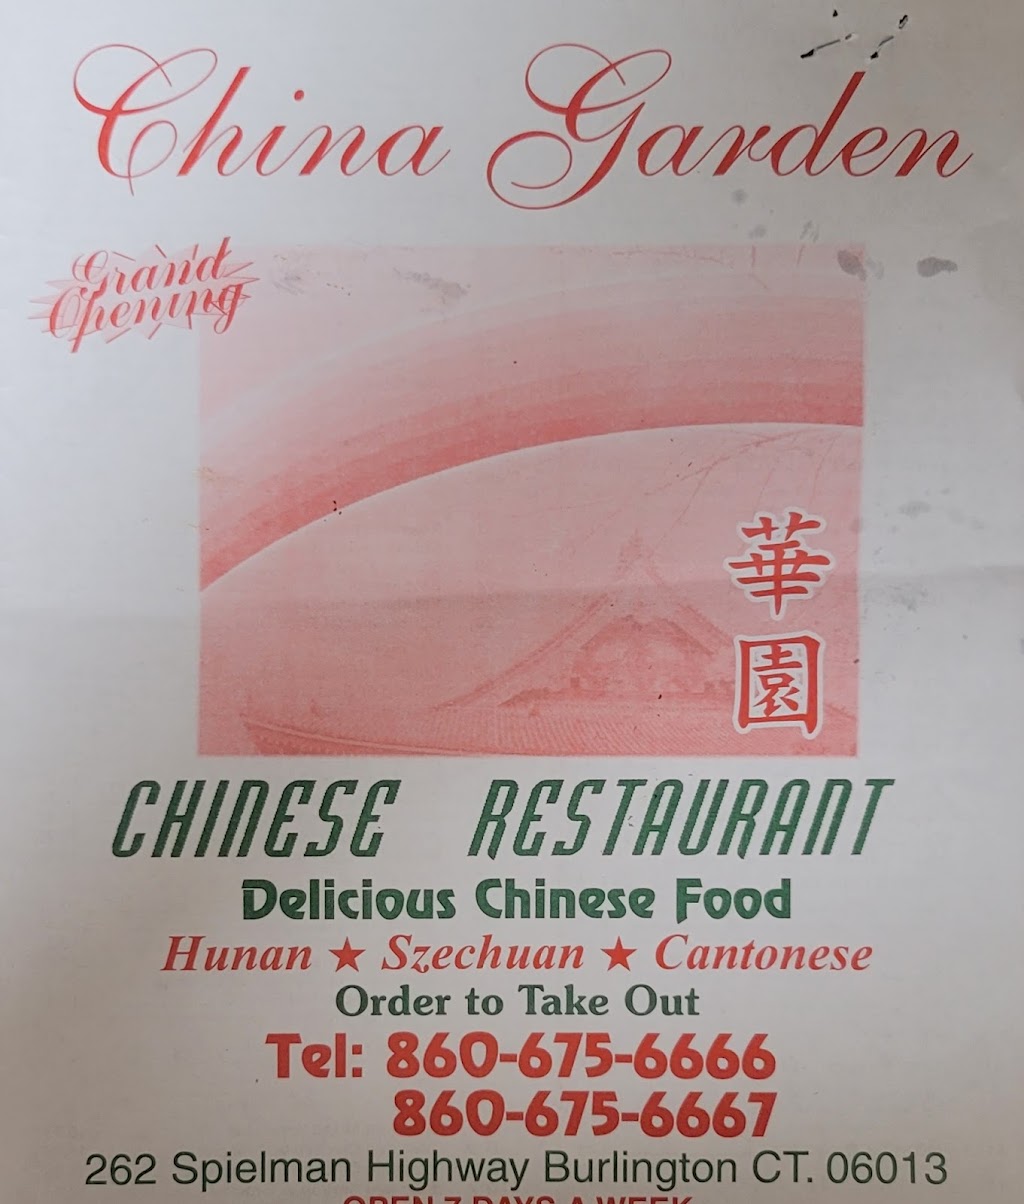 China Garden | 262 Spielman Hwy, Burlington, CT 06013 | Phone: (860) 675-6666